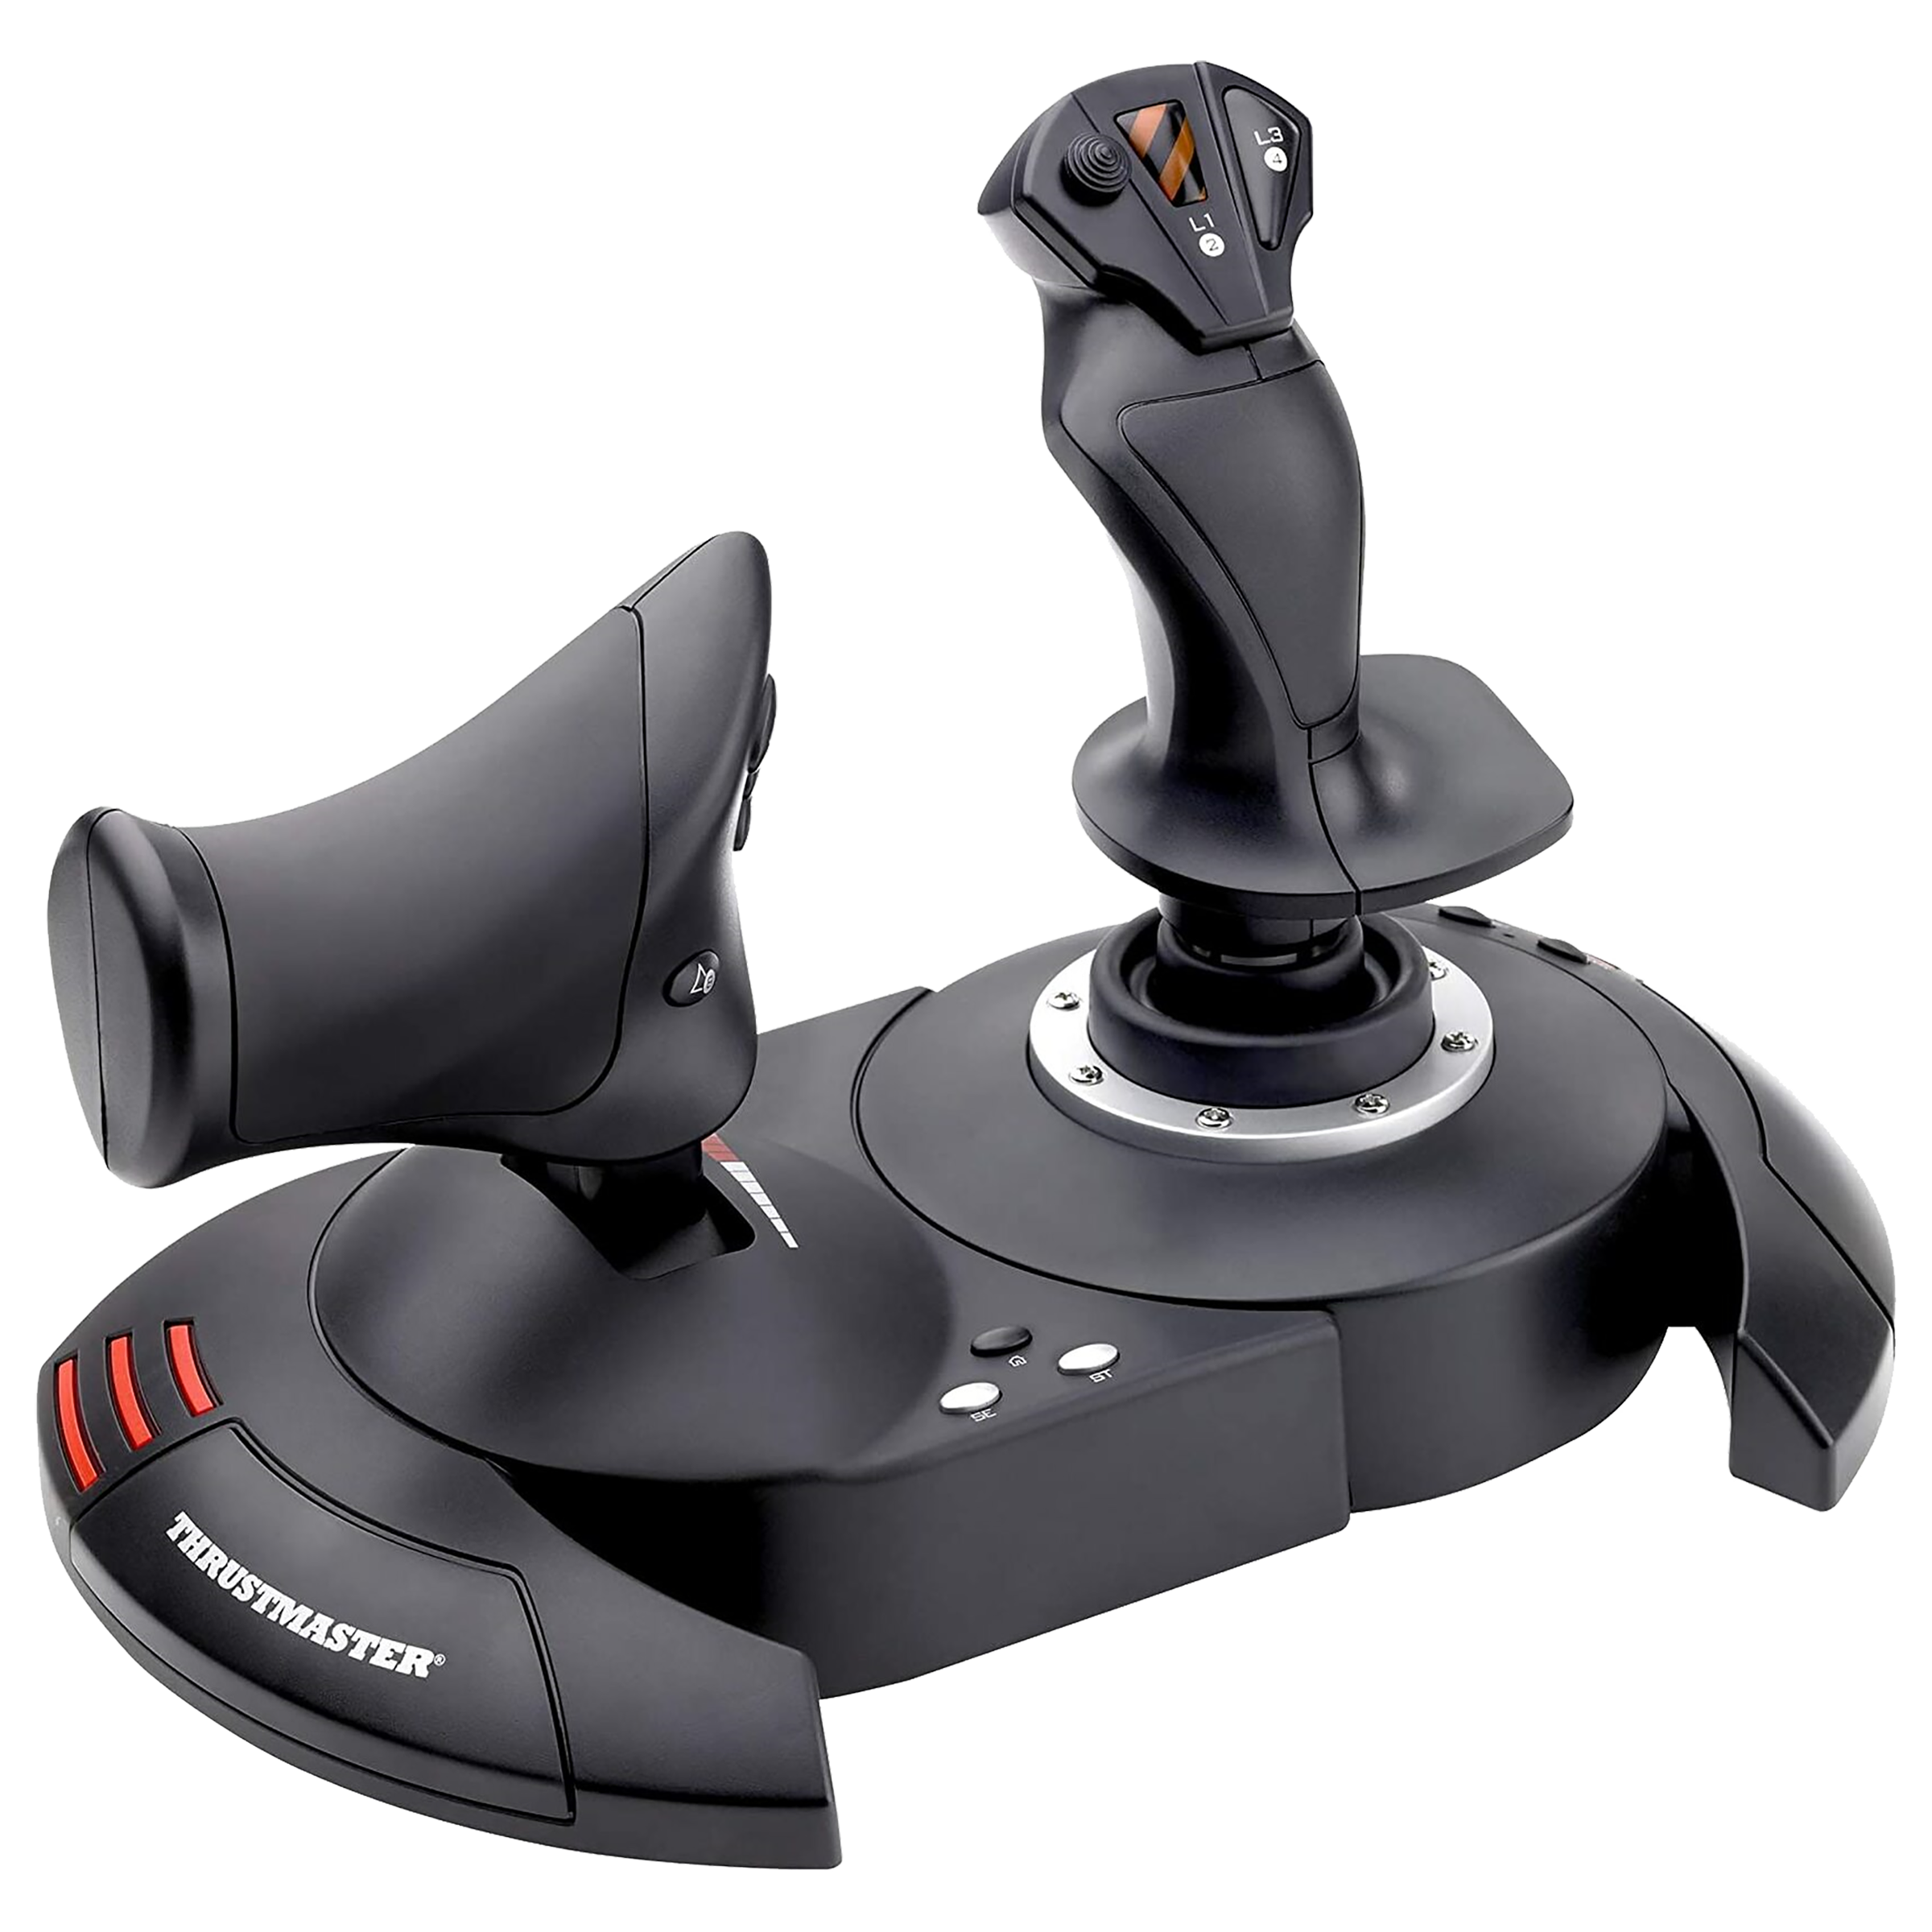 Thrustmaster T Flight Hotas X PC/PS3 Joystick For PS3 / PC (Dual-System Aerodynamic Control, Black)_1